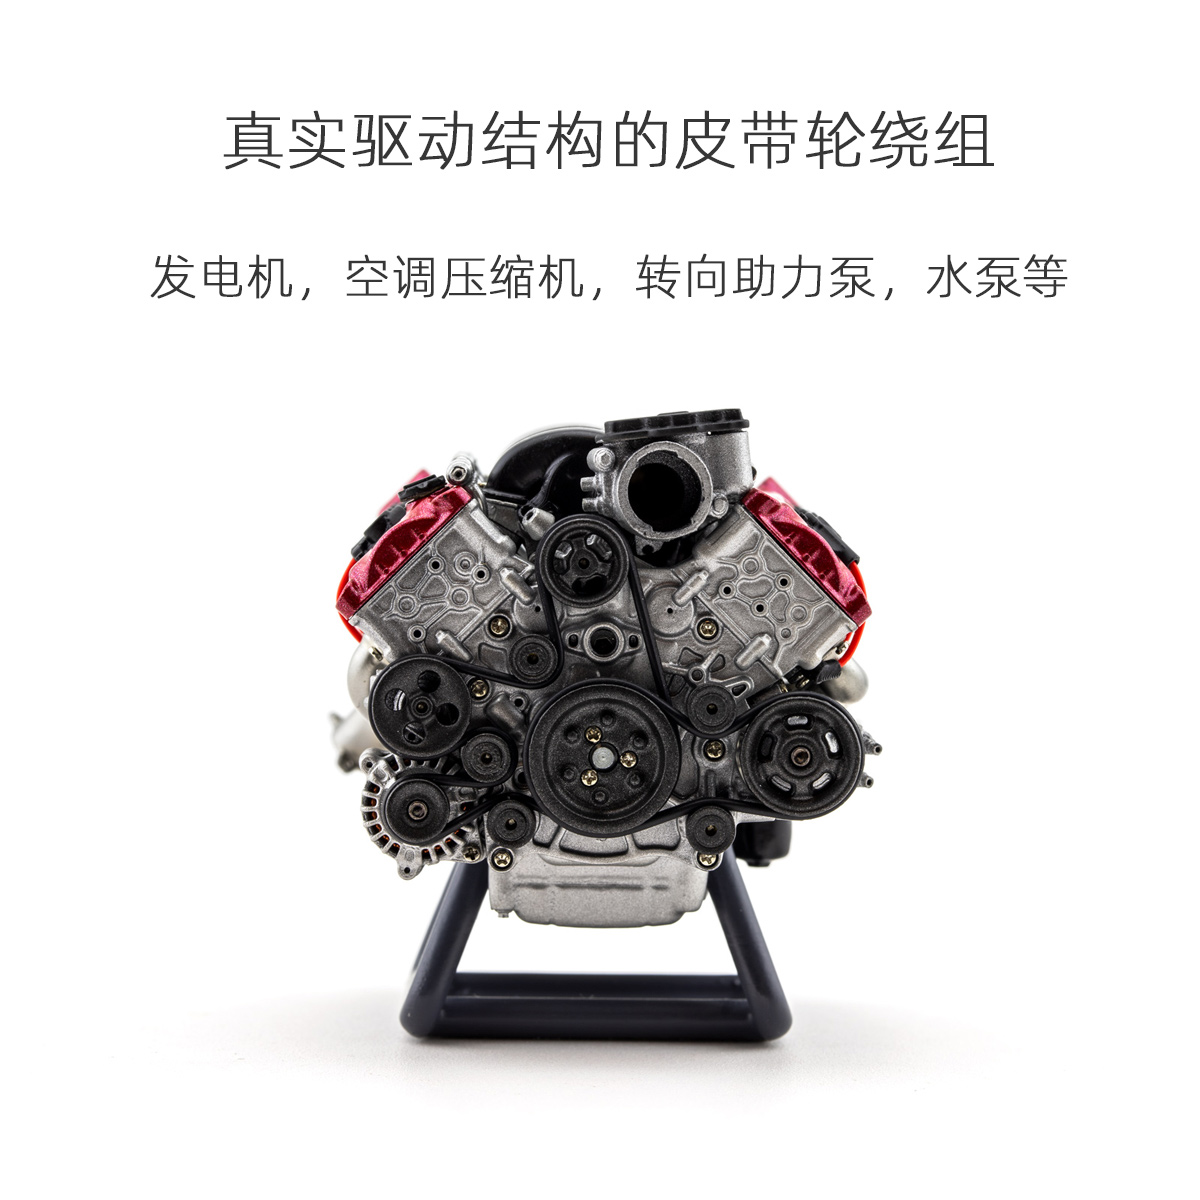 MAD心擎 引擎发动机90104 SCX10二代 VS410 Pro/Ultra capra 现货 - 图1